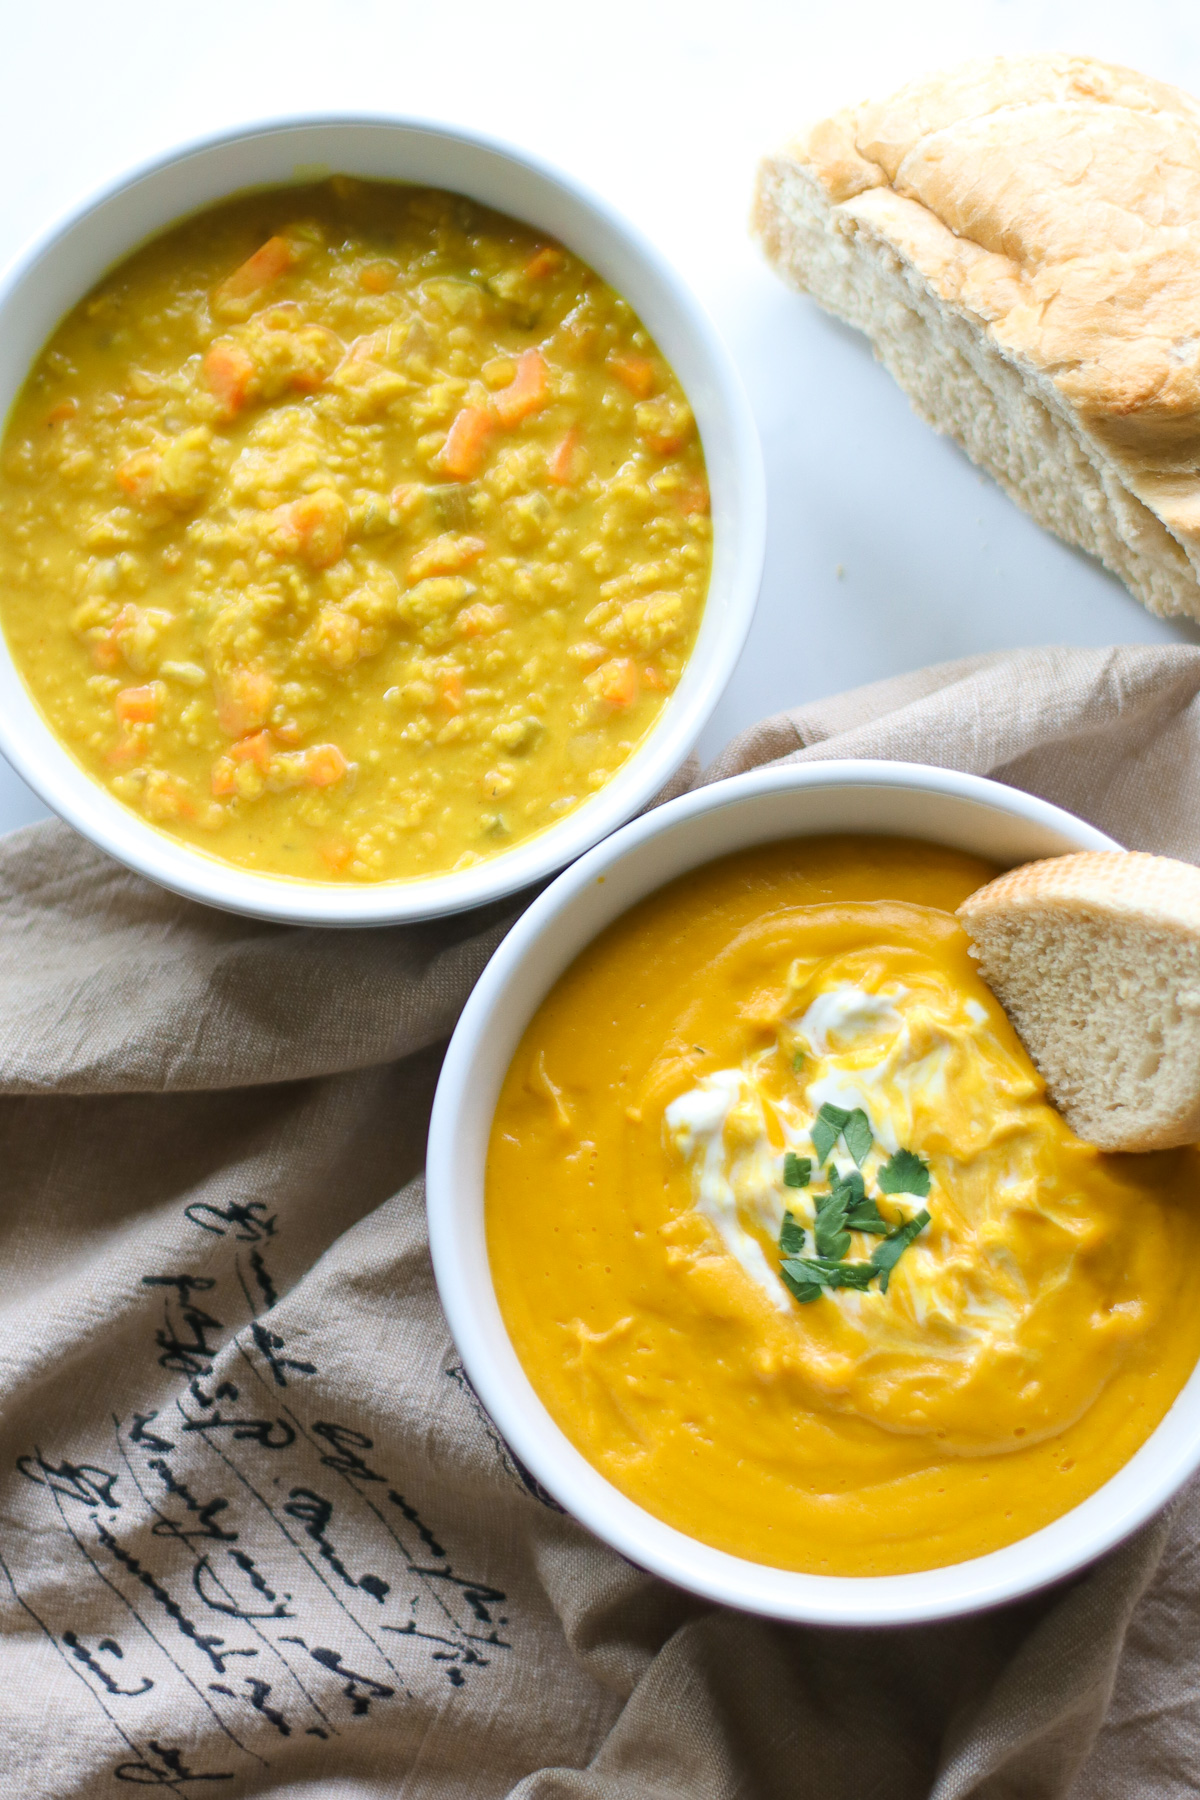 https://www.mjandhungryman.com/wp-content/uploads/2022/11/Carrot-and-lentil-soup.jpg